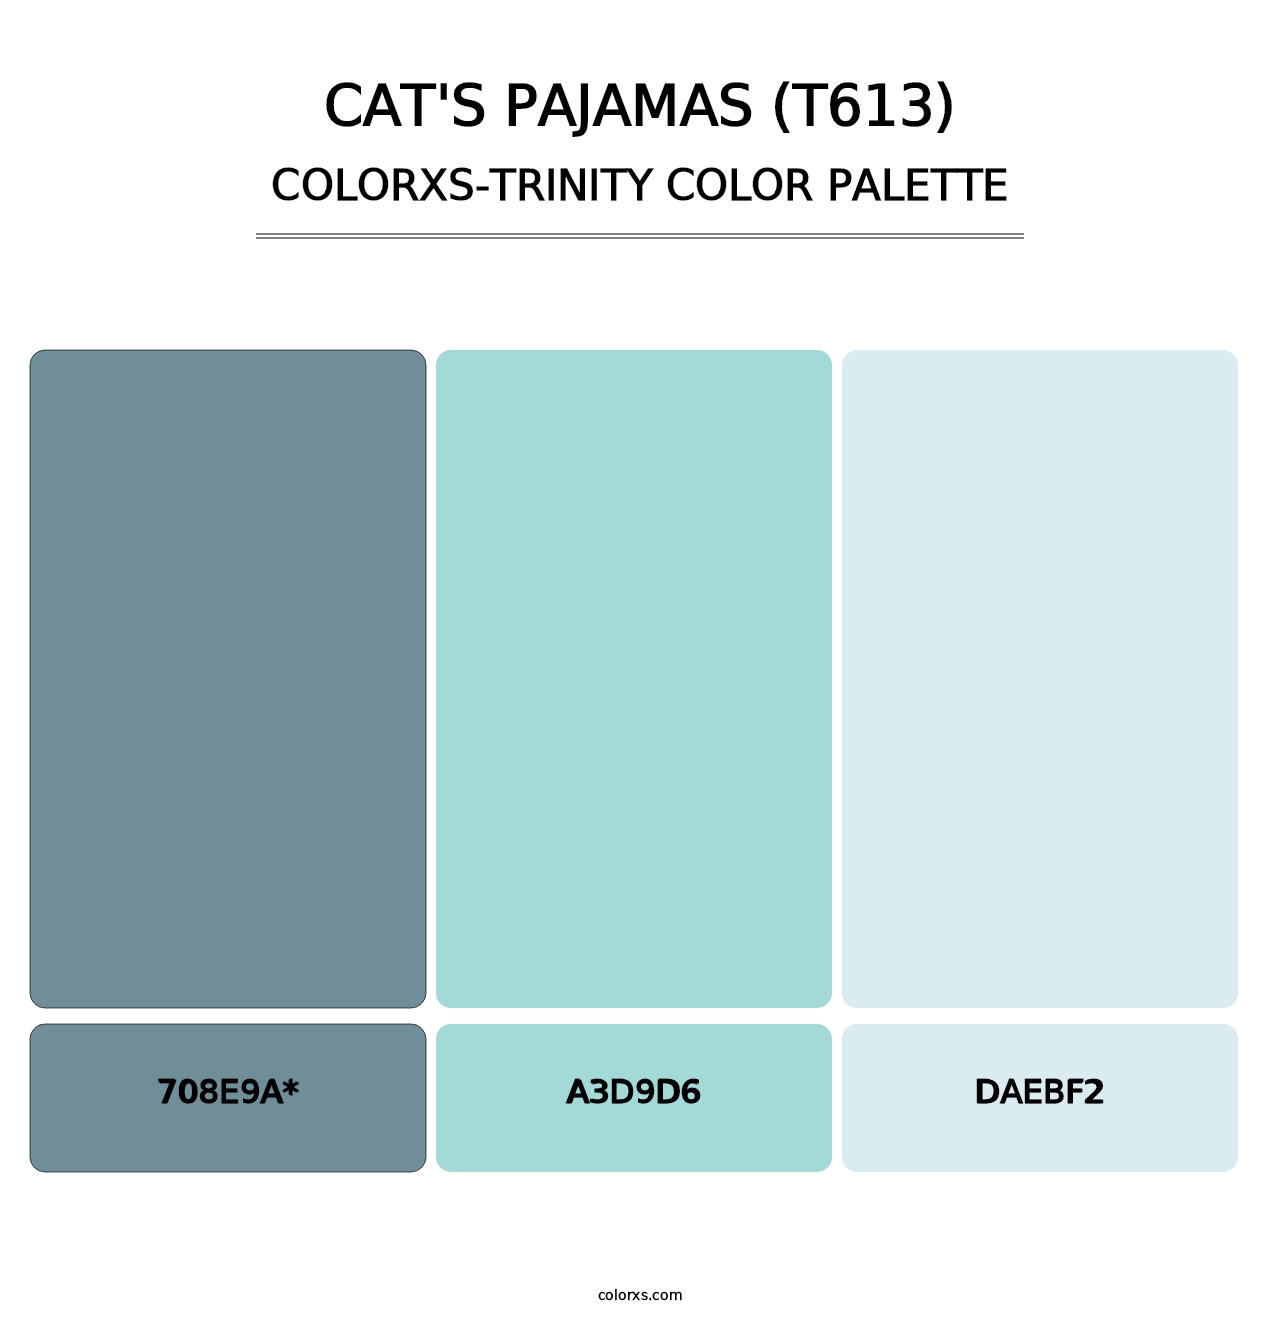 Cat's Pajamas (T613) - Colorxs Trinity Palette